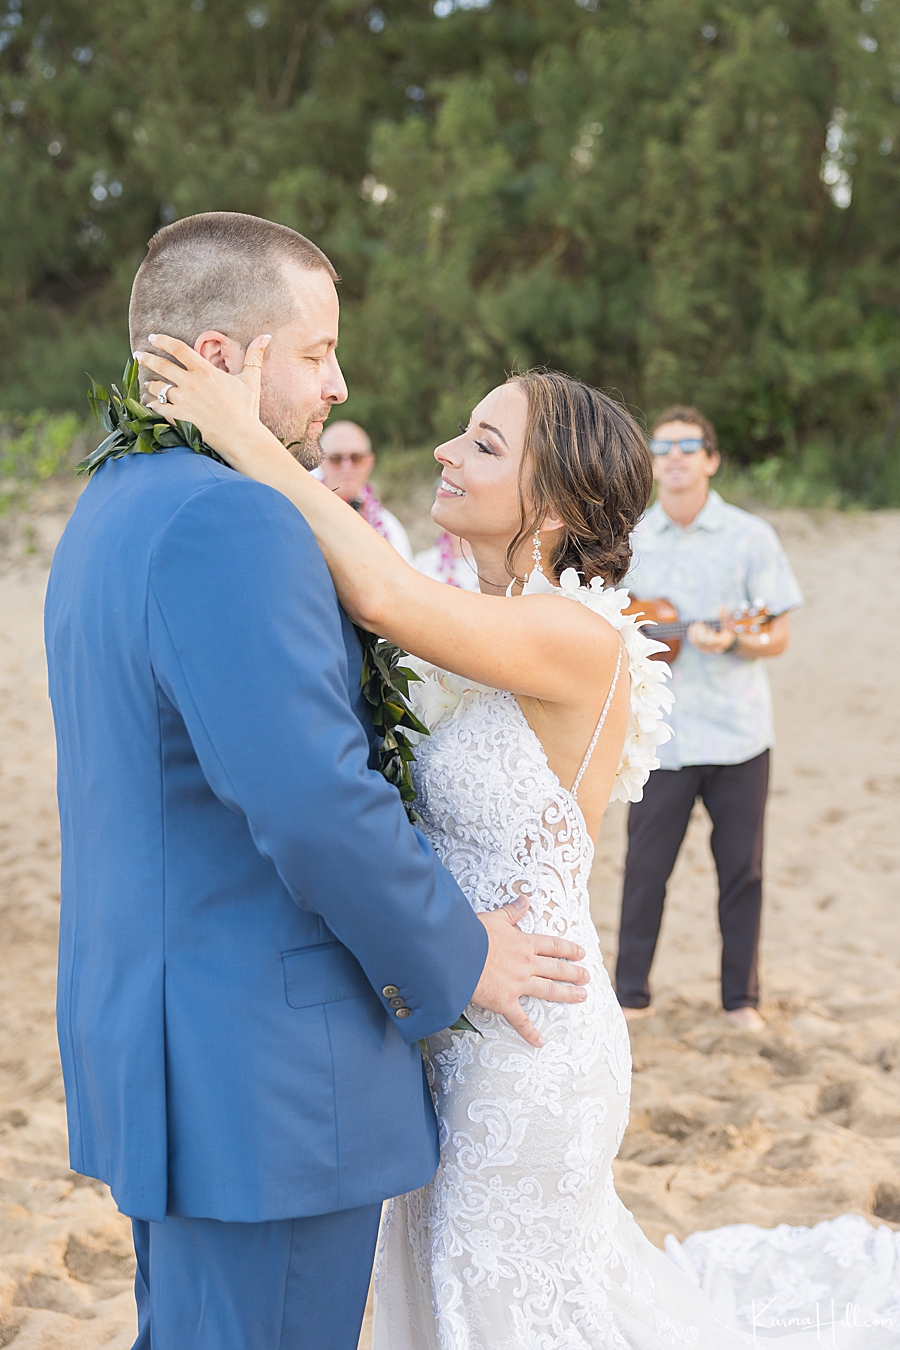 newlyweds first dance at hawaii beach wedding